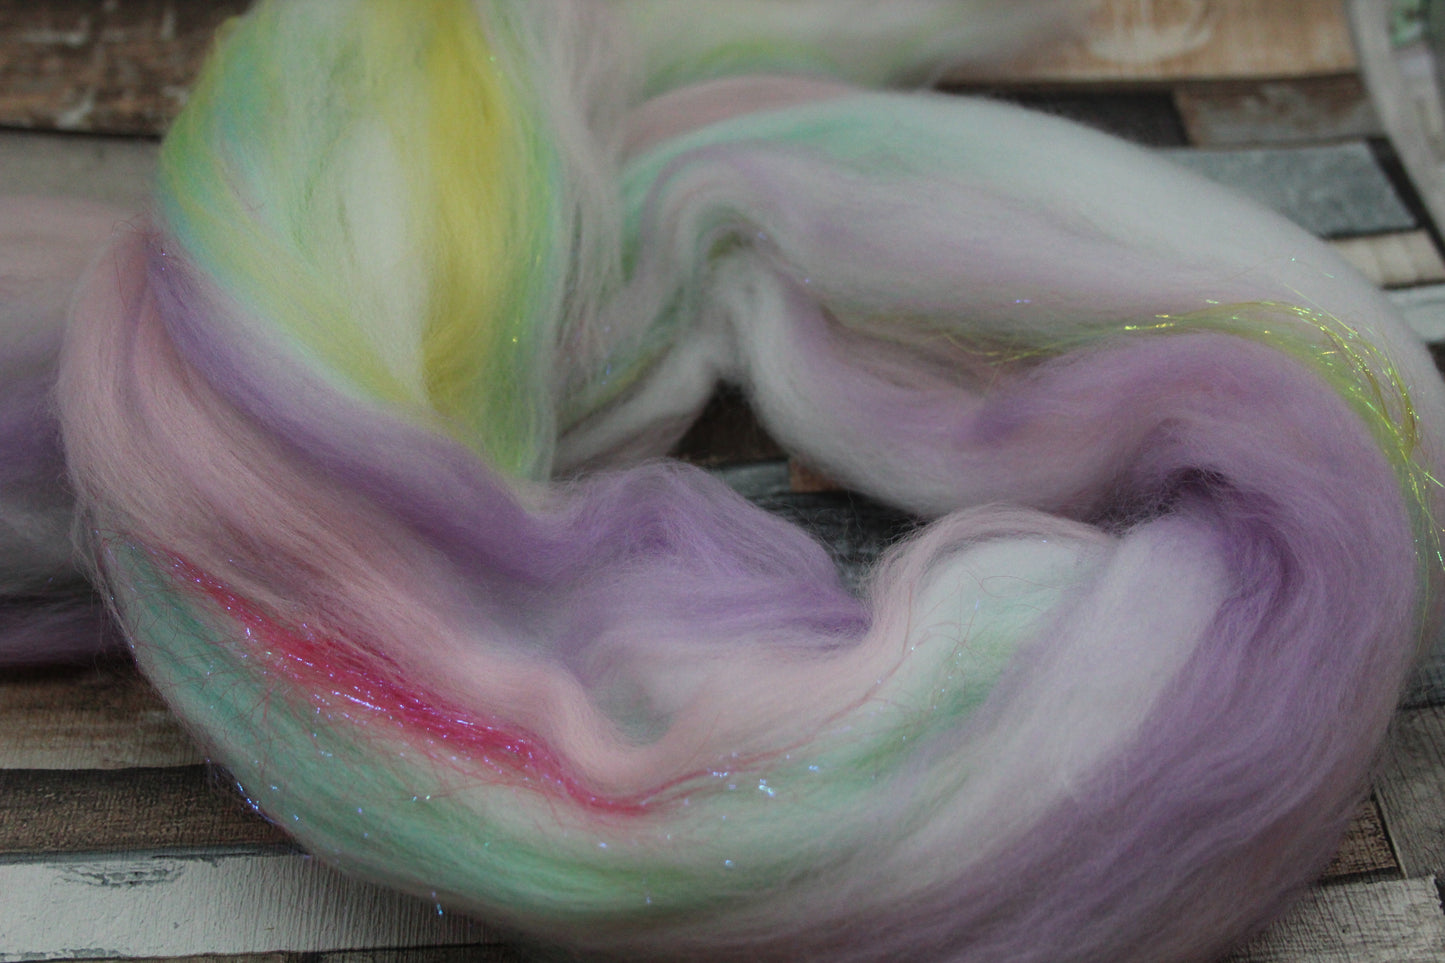 Merino Wool Blend - Pink Turquoise Yellow Purple Green - 32 grams / 1.1 oz  - Fibre for felting, weaving or spinning